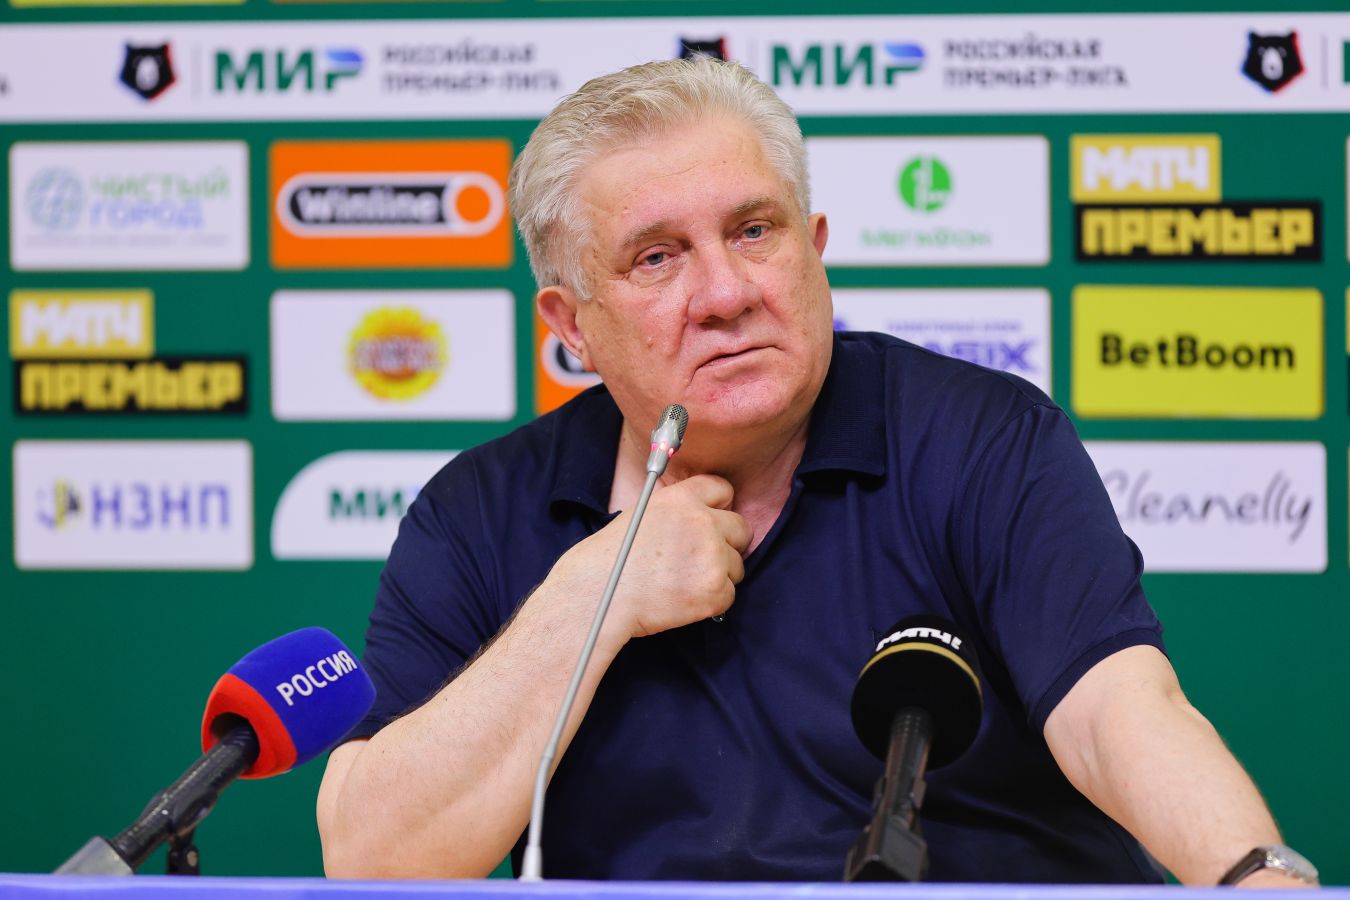 Сергей Ташуев назвал матч с «Пари НН» худшим за время работы в «Ахмате»